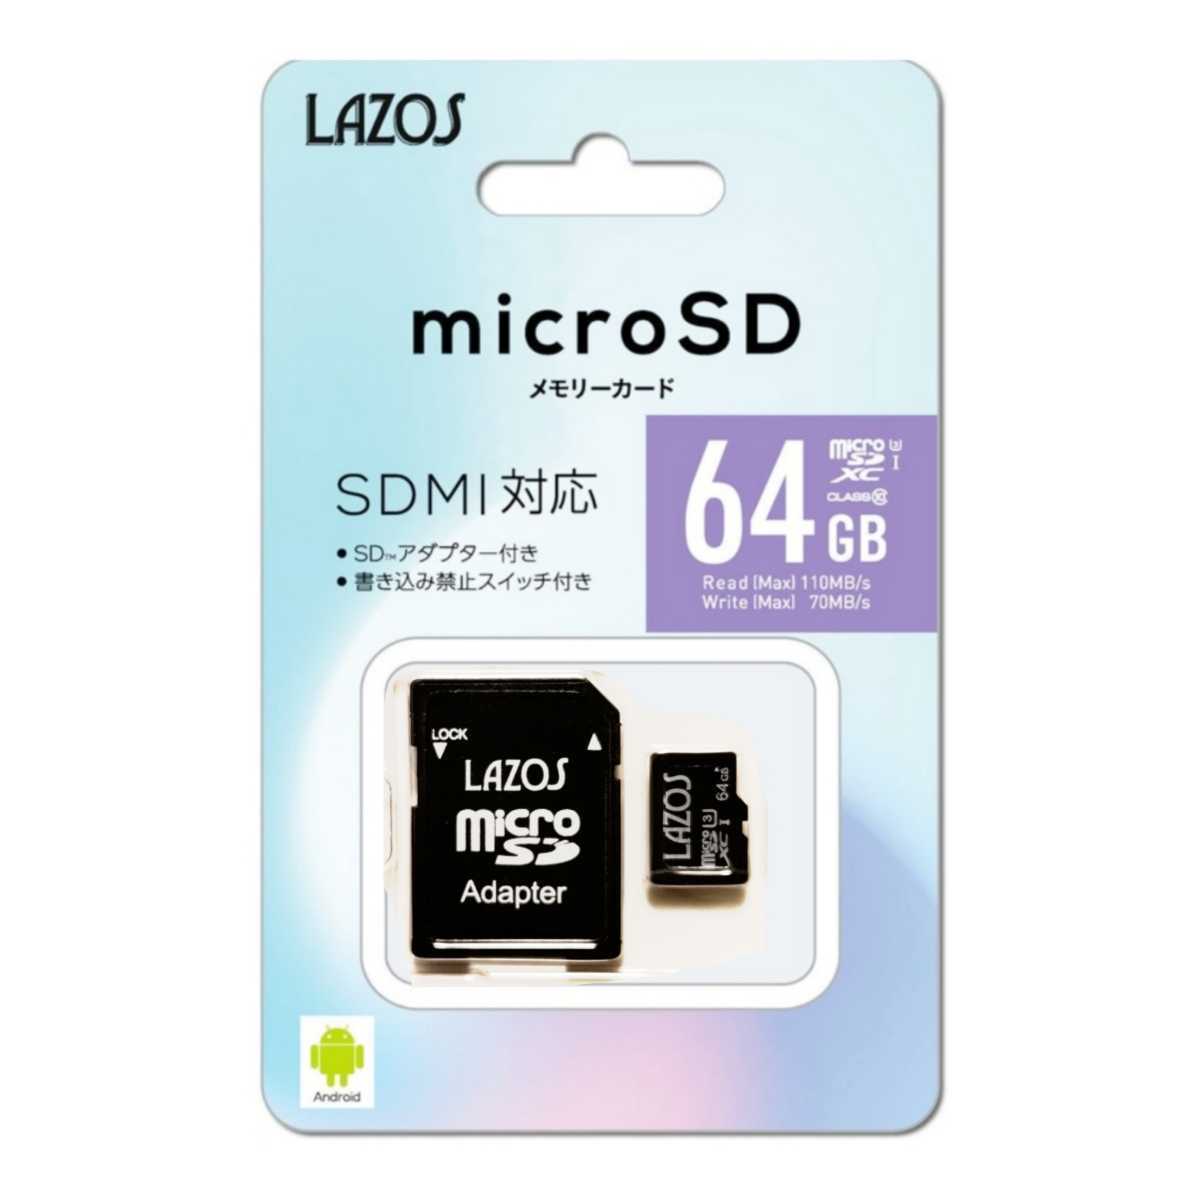 microSDXC64GB memory card (LAZOS) L-64MSD10-U3[1 jpy start exhibition * new goods * free shipping ]